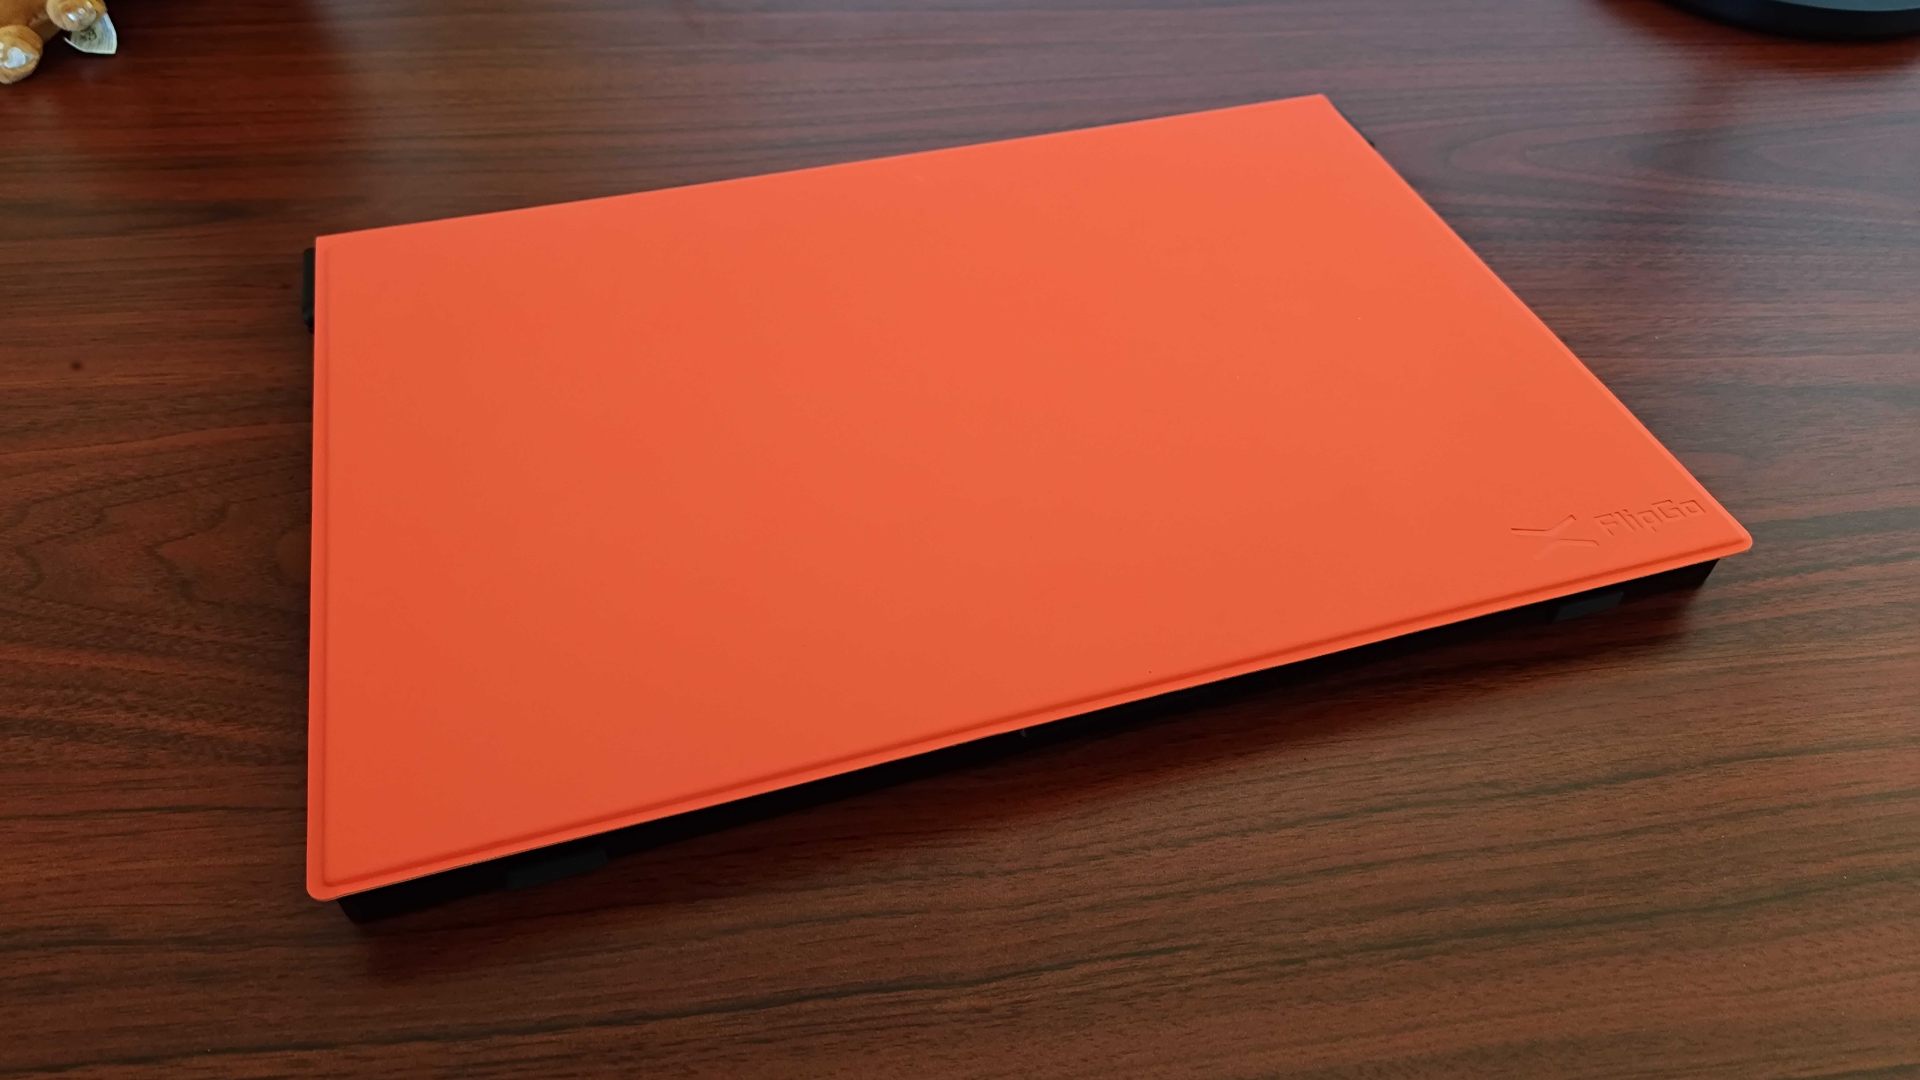 Jsaux FlipGo lying on desk with orange cover attached